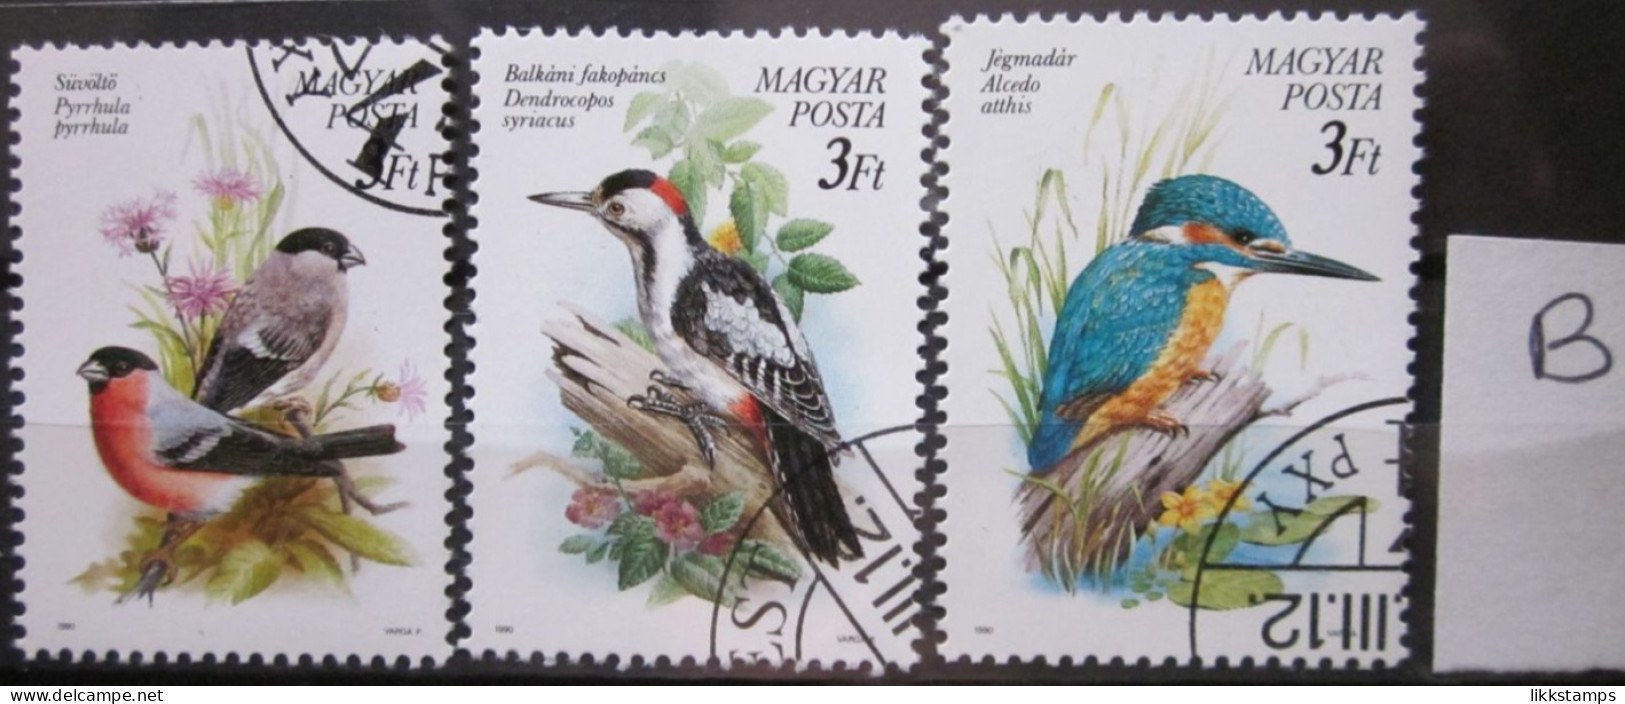 HUNGARY ~ 1990 ~ S.G. NUMBERS 3960 - 3962, ~ 'LOT B' ~ BIRDS. ~ VFU #02795 - Gebruikt